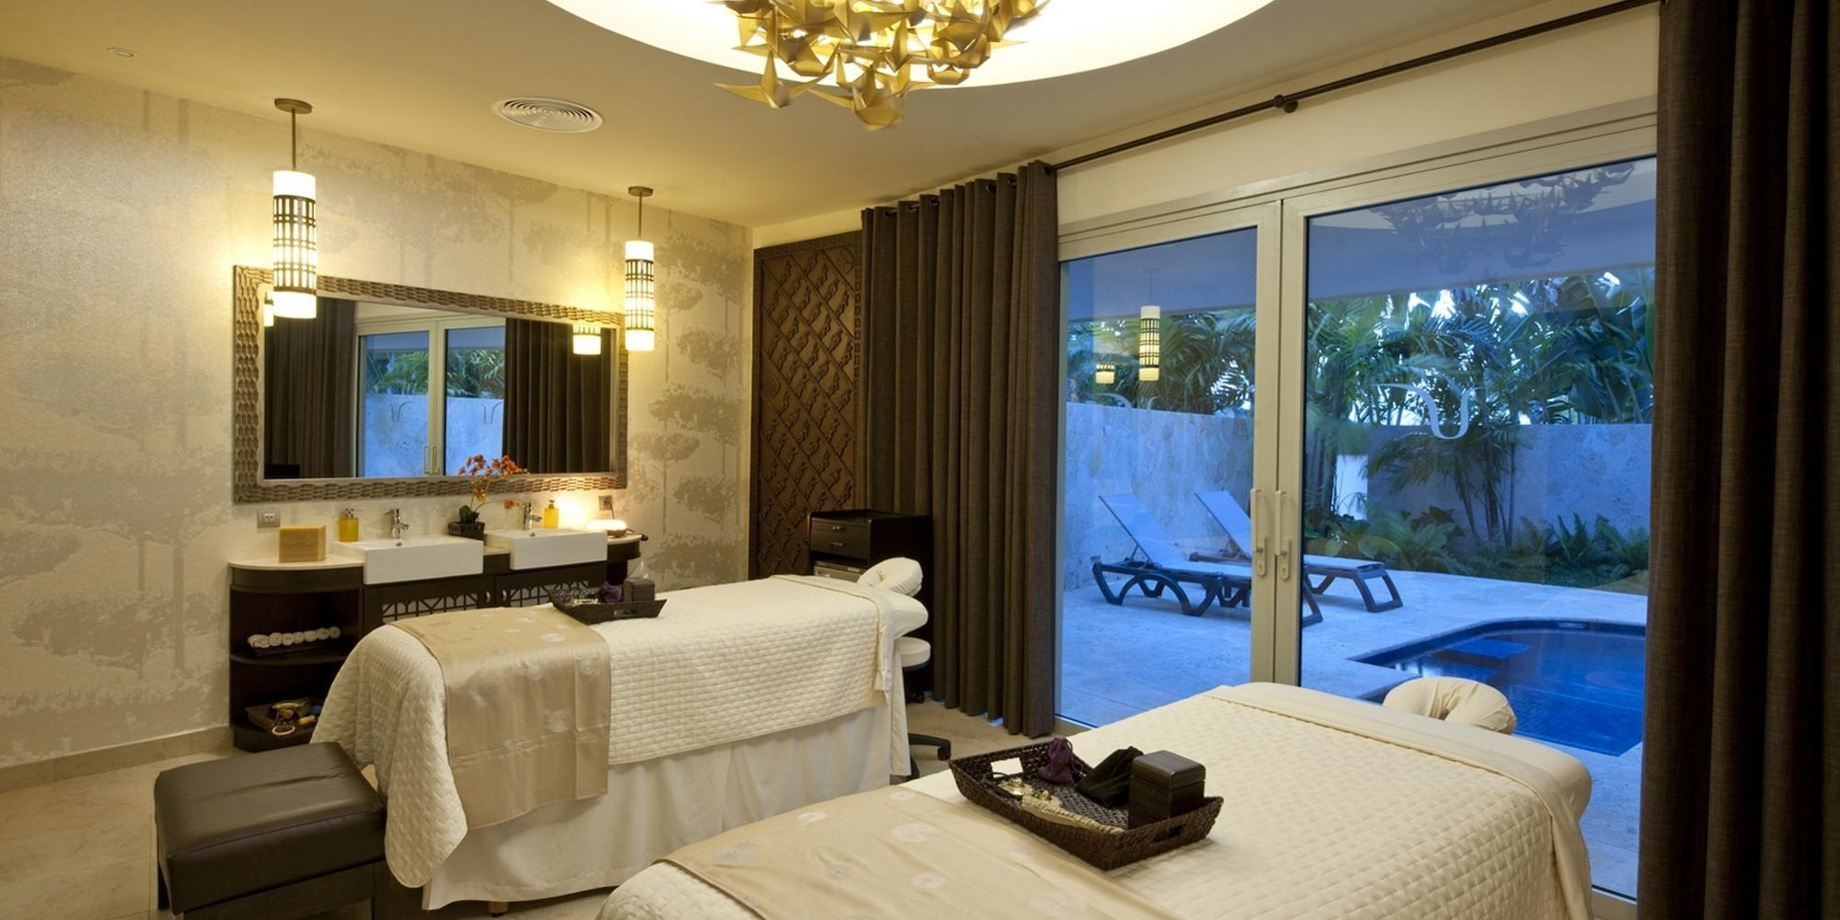 Barceló Bávaro Palace Hotel Grand Resort – Punta Cana, Dominican Republic – Spa